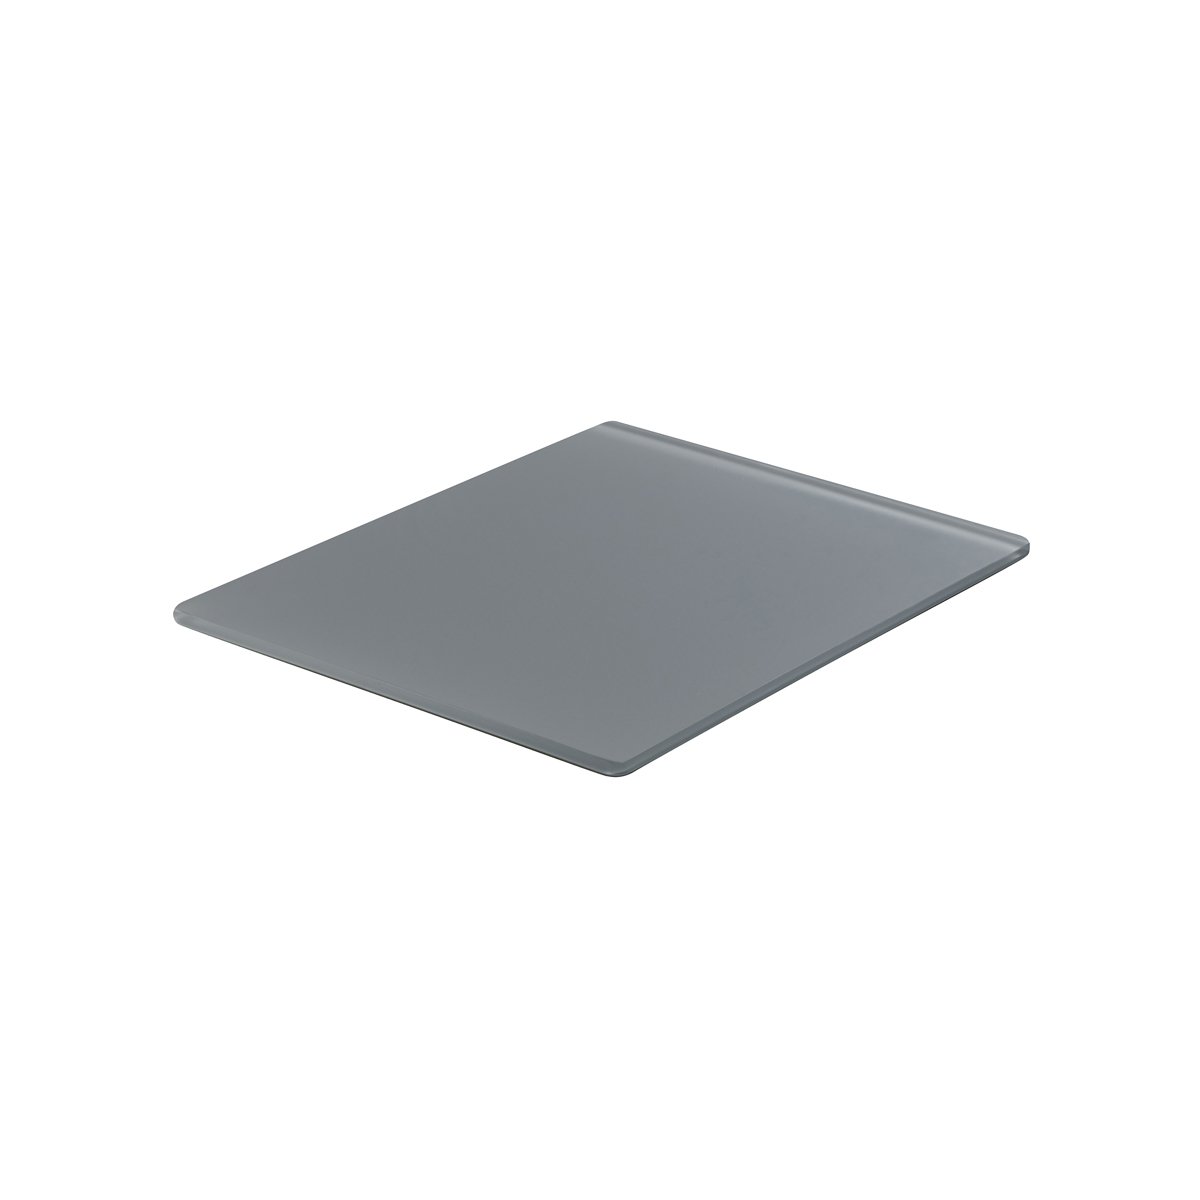 MLP115796 Mealplak 1/2 Size Tray Concrete 325x265x10mm Tomkin Australia Hospitality Supplies